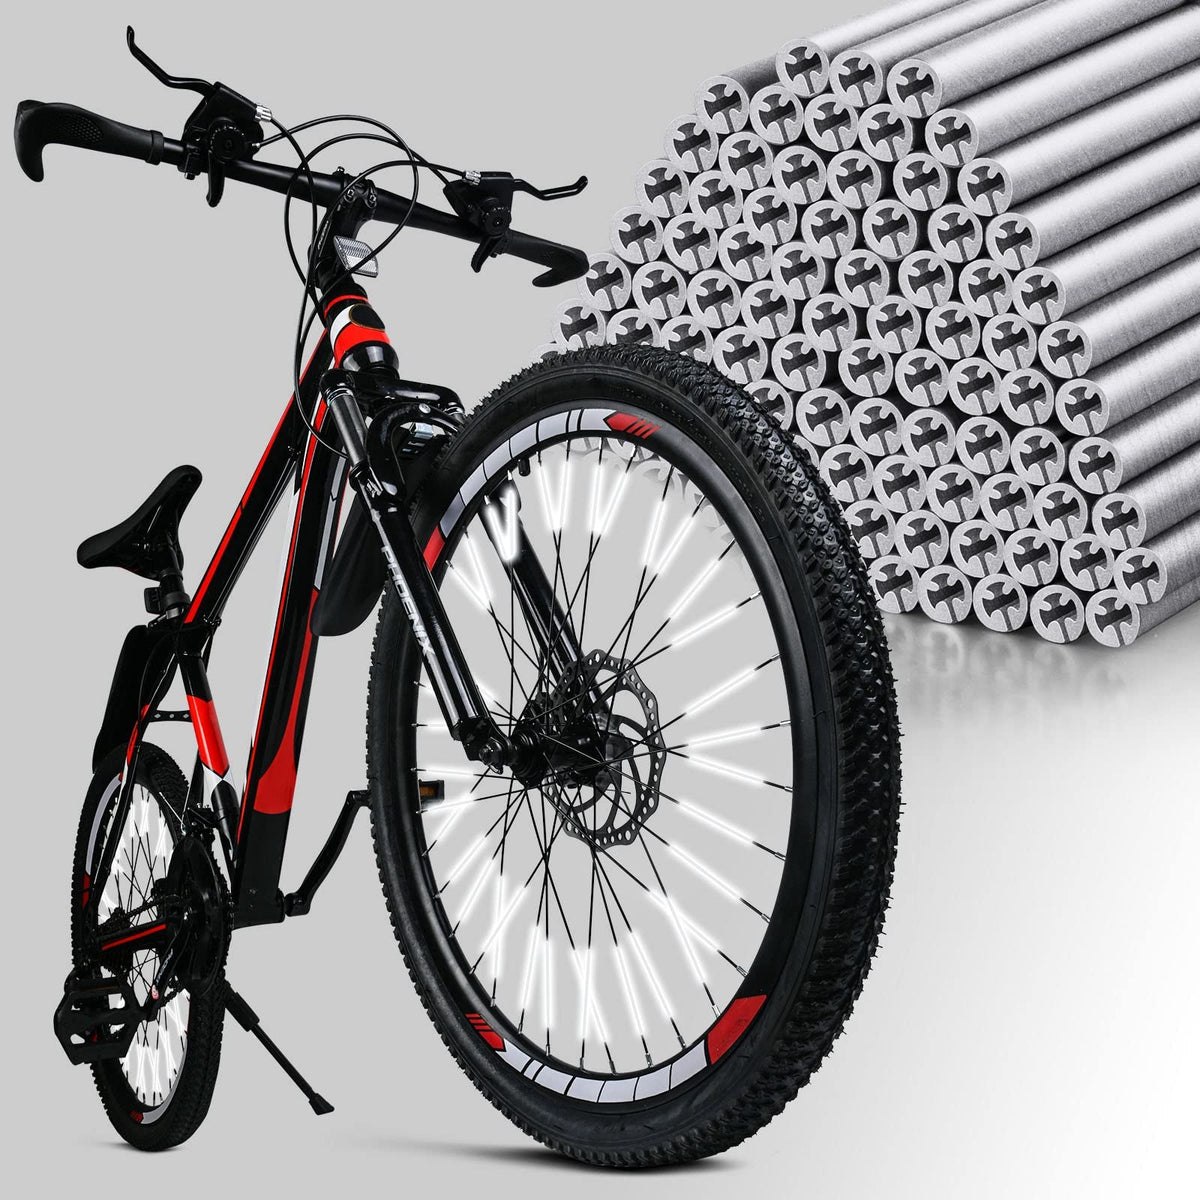 Cycling Reflectors, 48Pcs Bike Wheel Spoke Reflectors, Universal Bicycle Reflective Clips Warning Spoke Lights Covers - Fit for All Standard Bike - Easy Mount